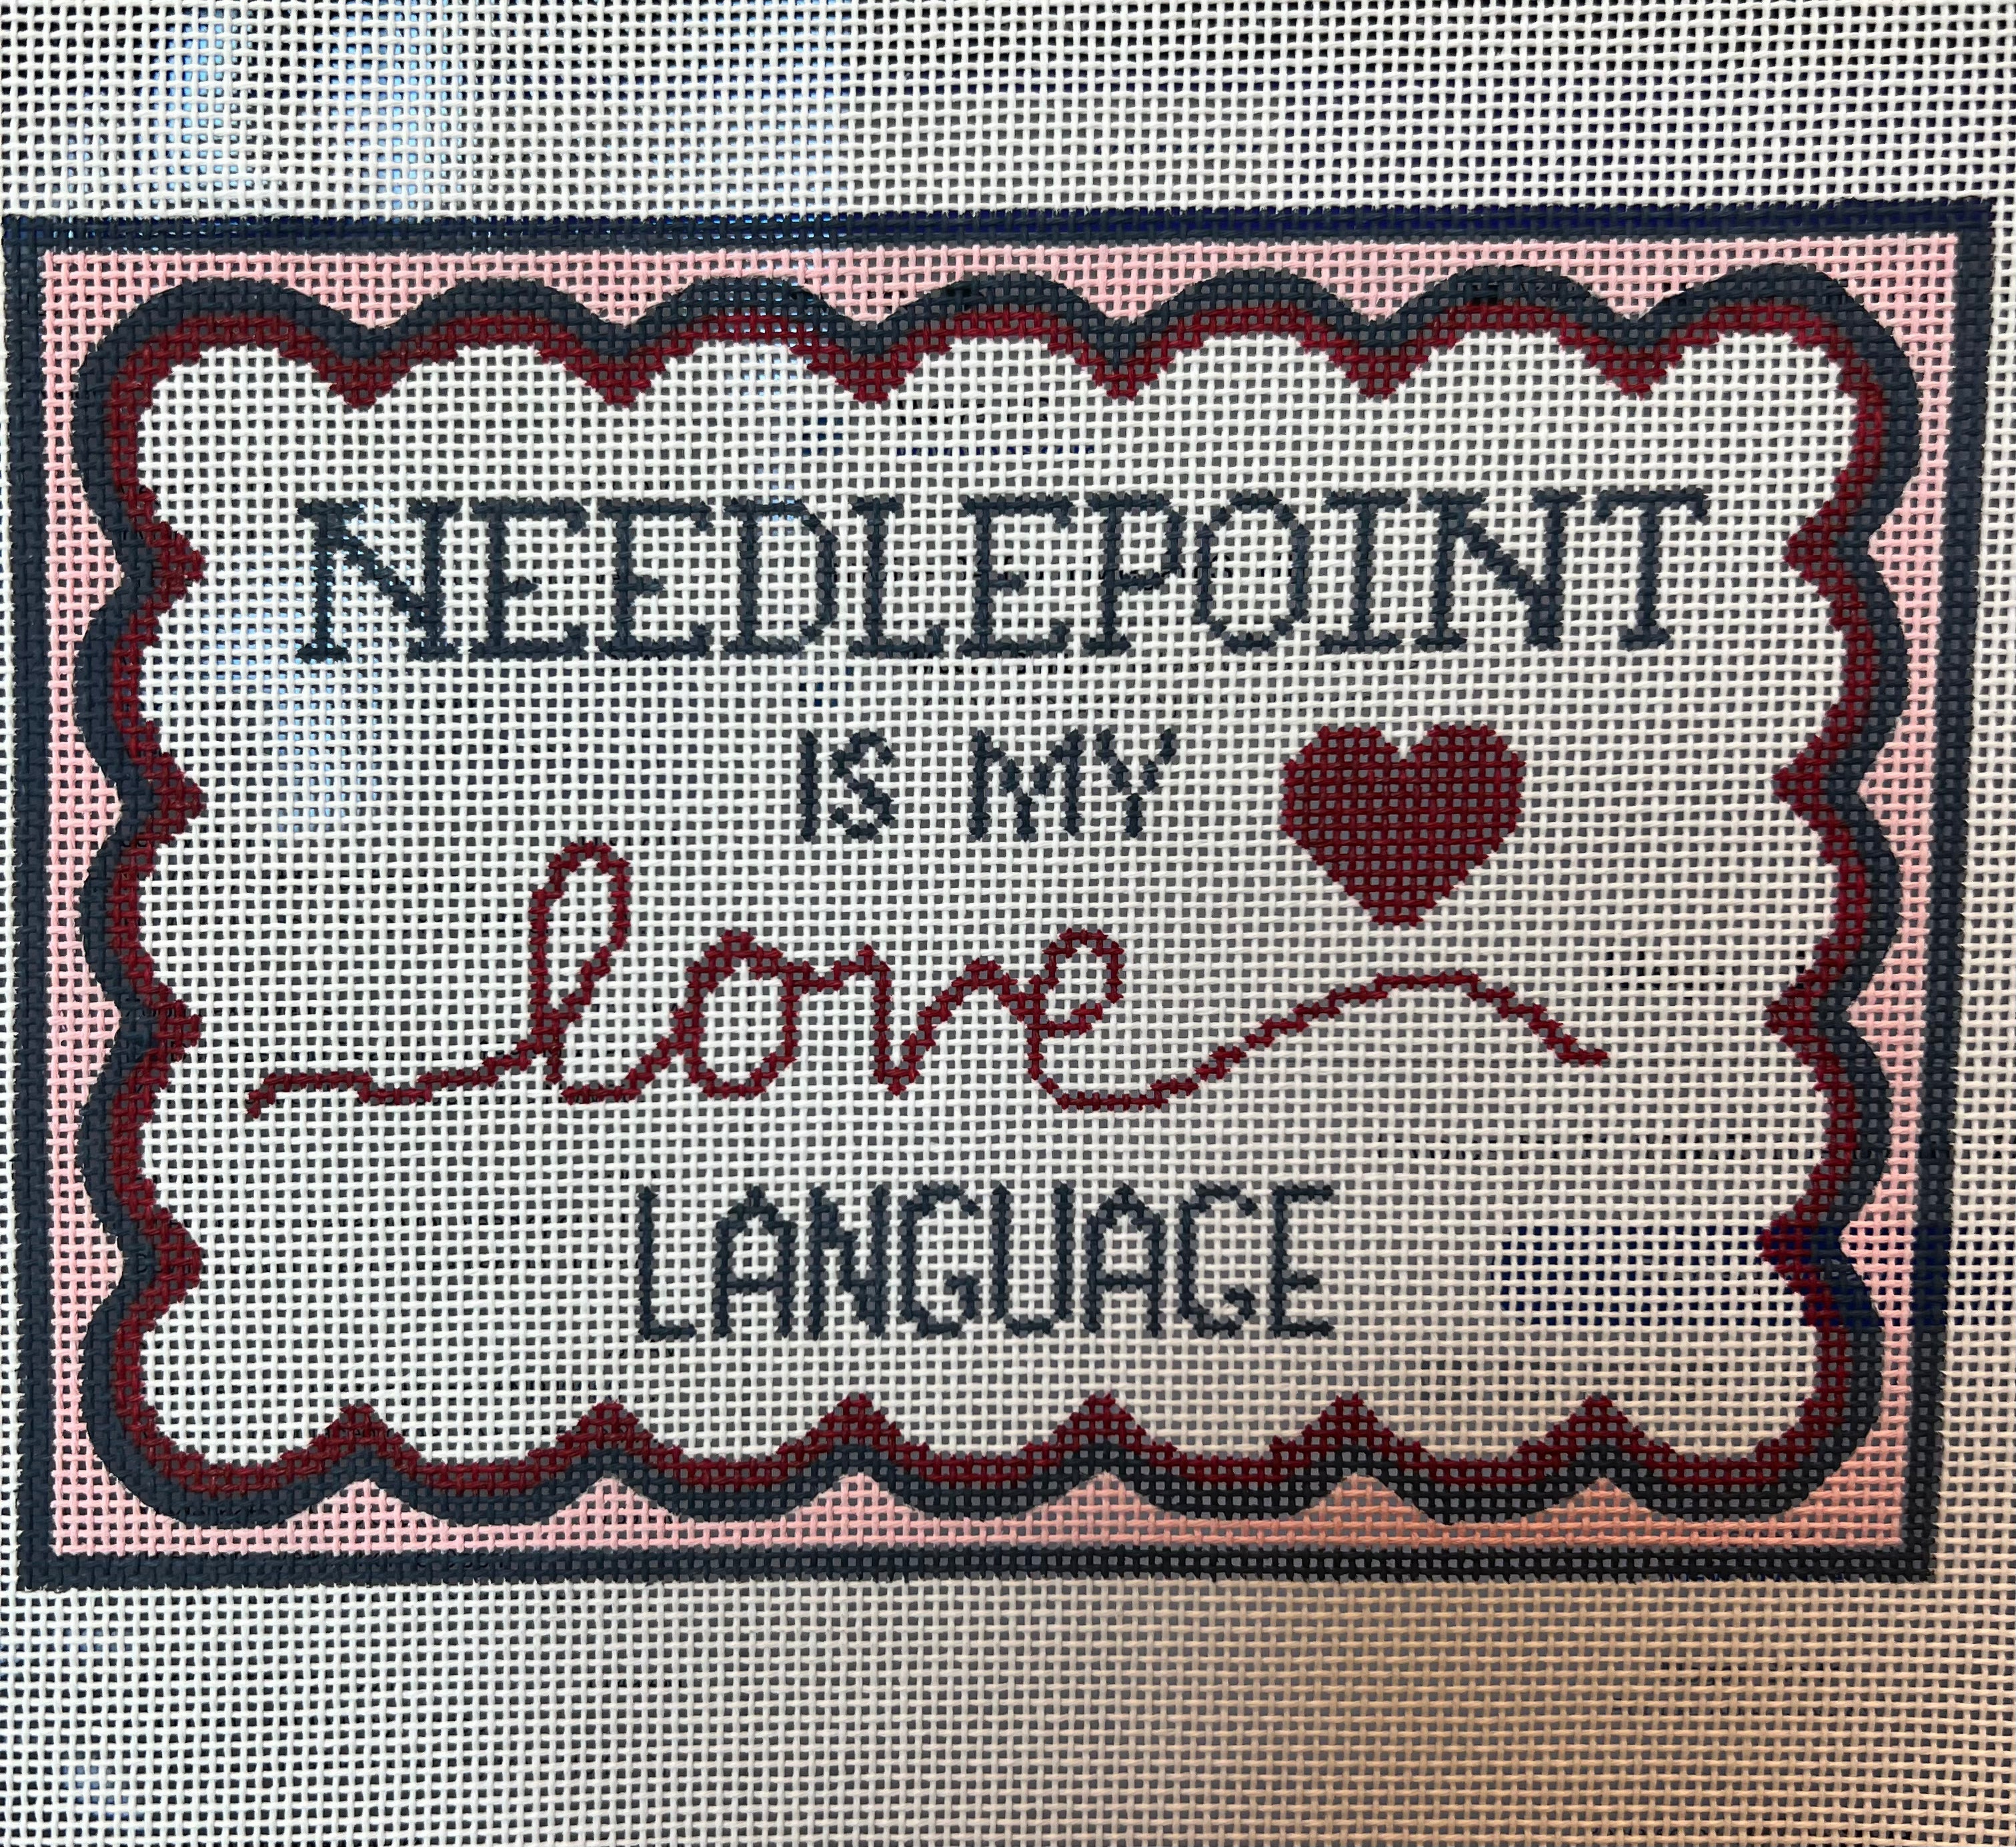 Needlepoint is my Love Language KS